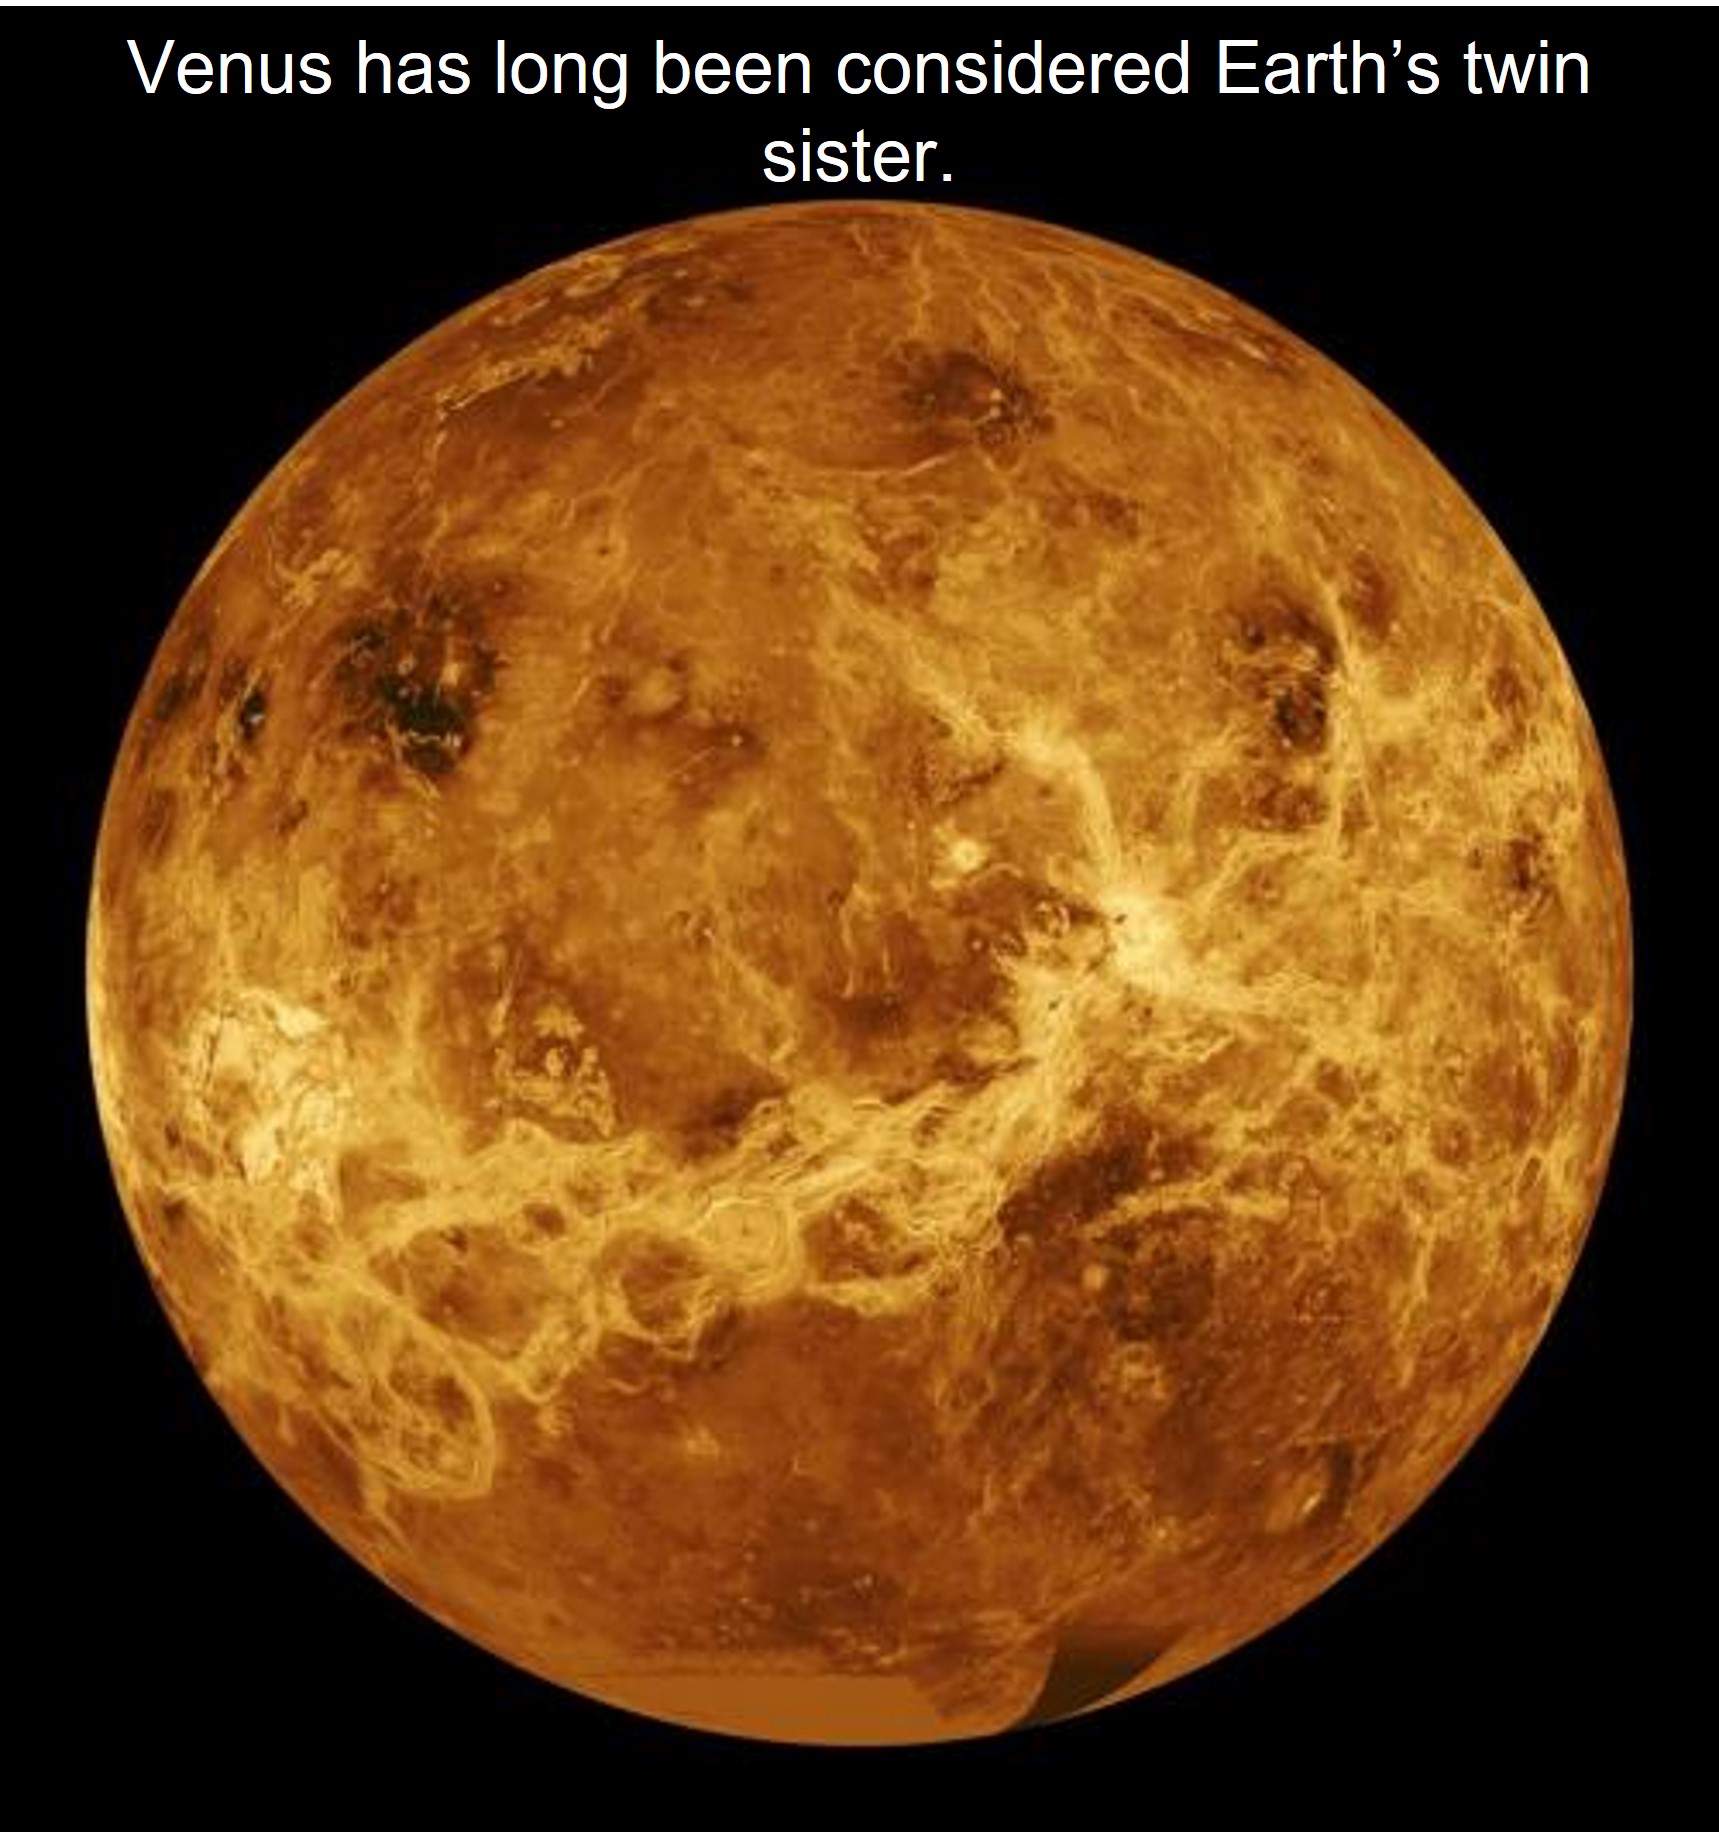 Venus, Earth’s twin sister?